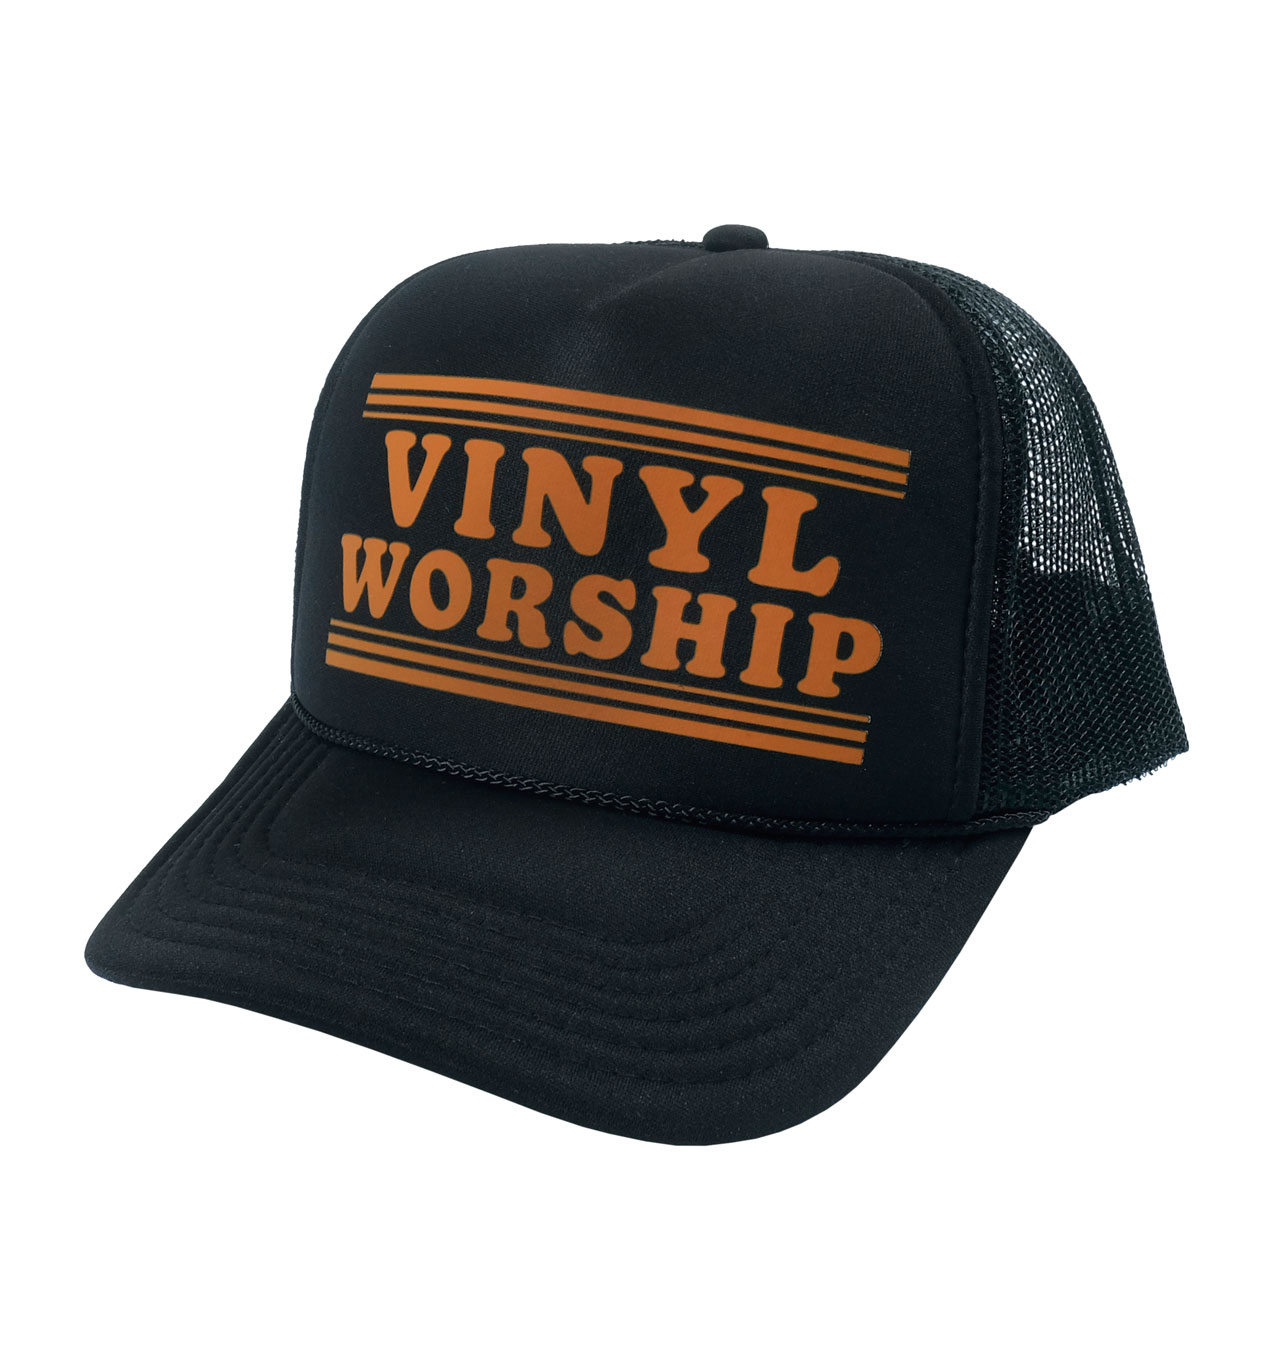 Mangobeard---Vinyl-Worship-Trucker-Cap---Black